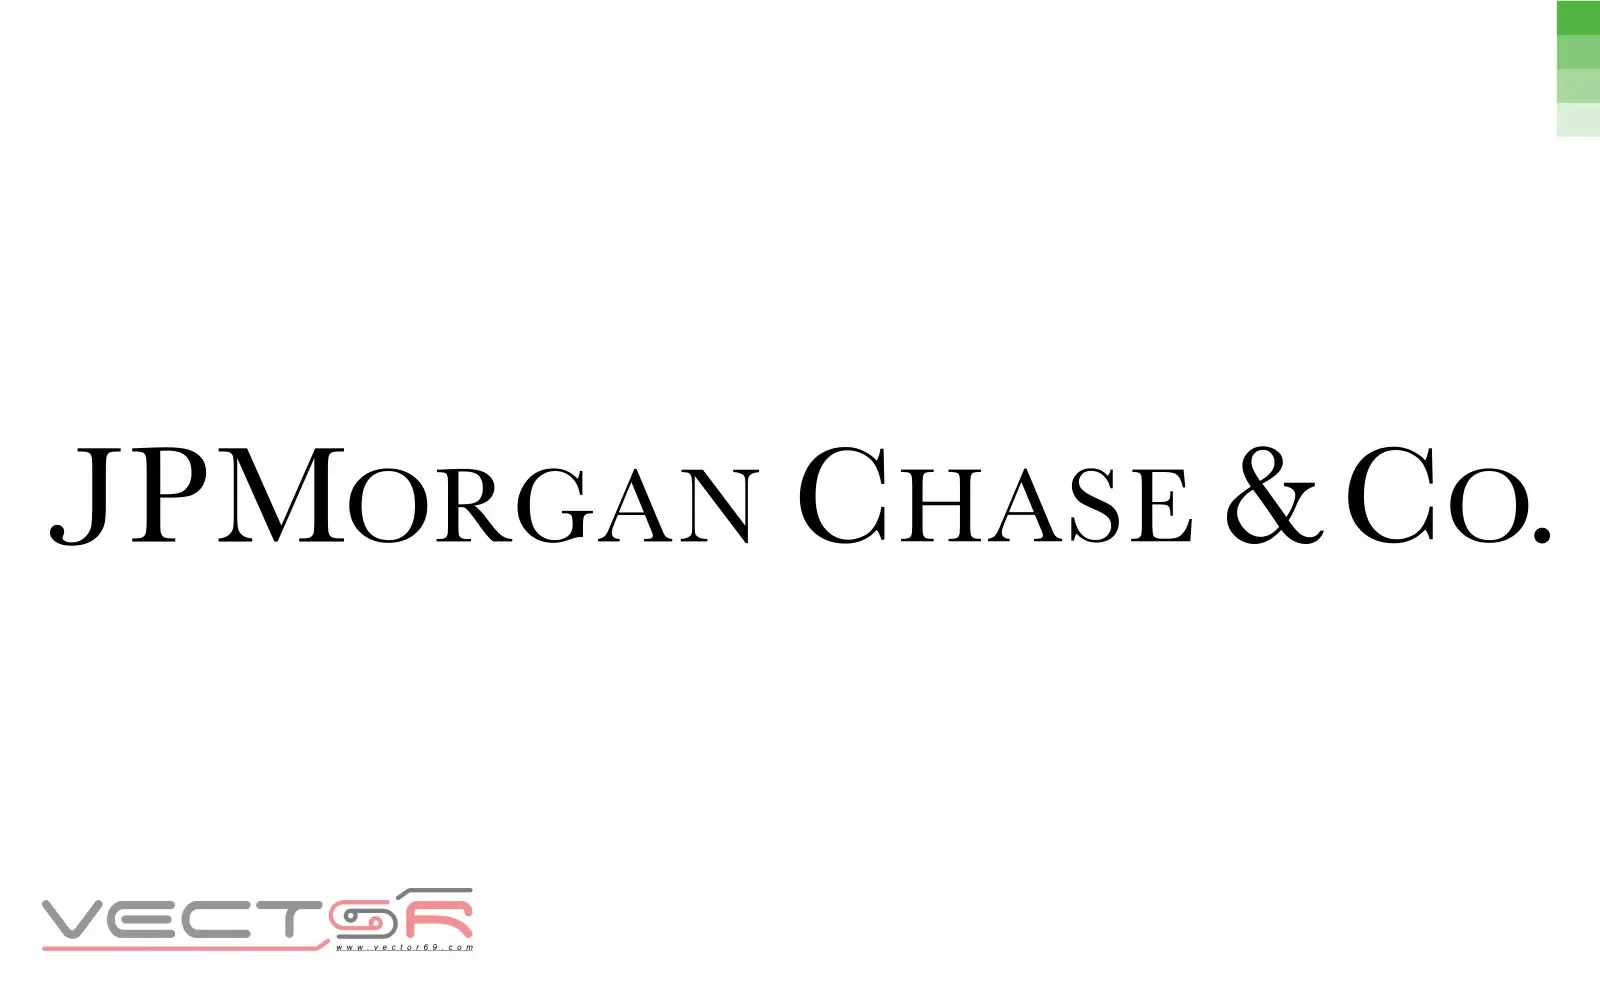 JPMorgan Chase & Co. Logo - Download Vector File CDR (CorelDraw)